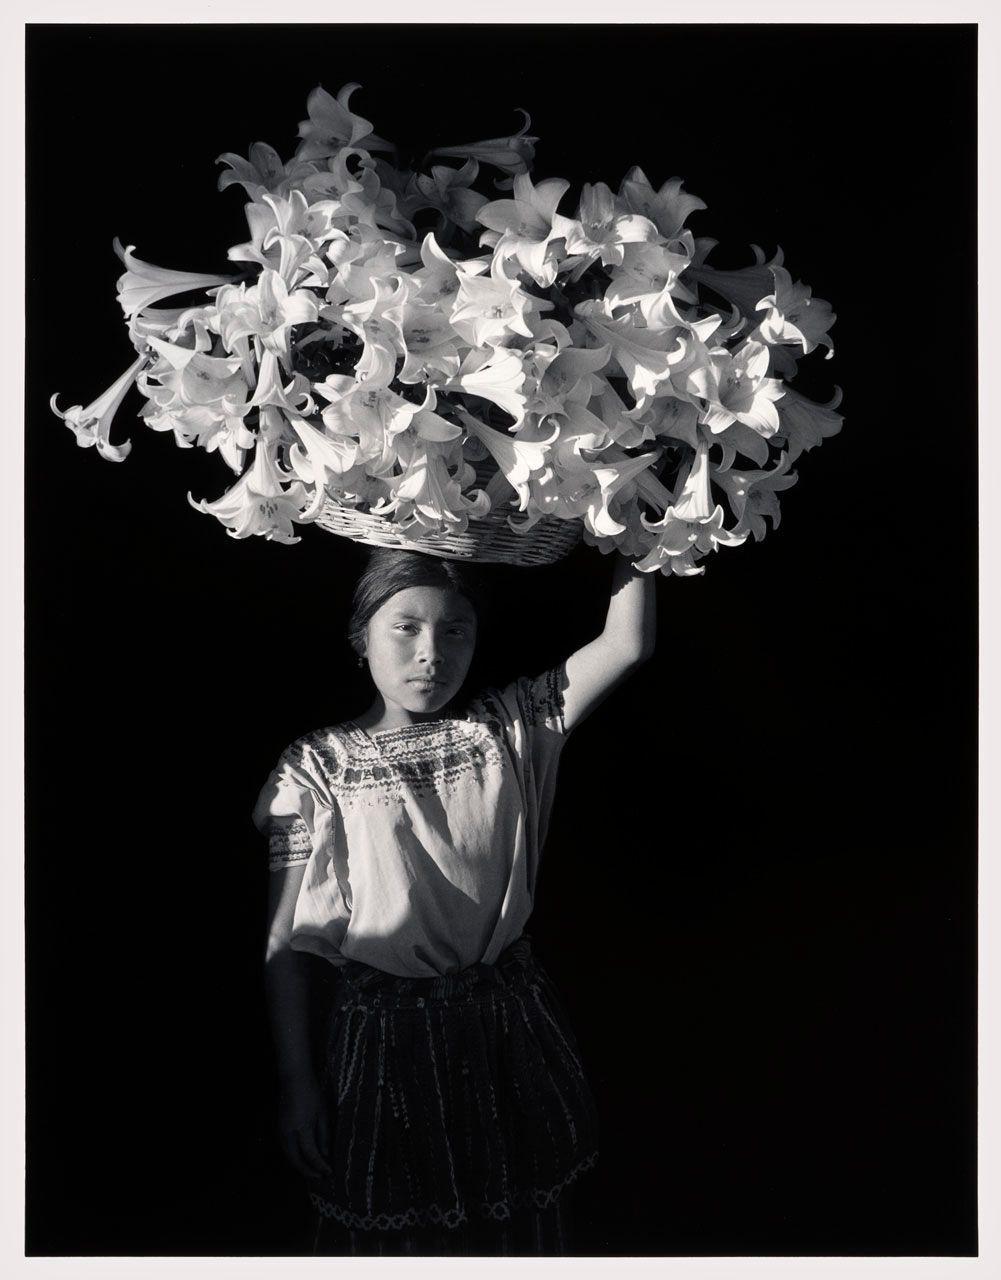 Basket of Light, Guatemala
Flor  Garduño 
20th Century
2015.101.6